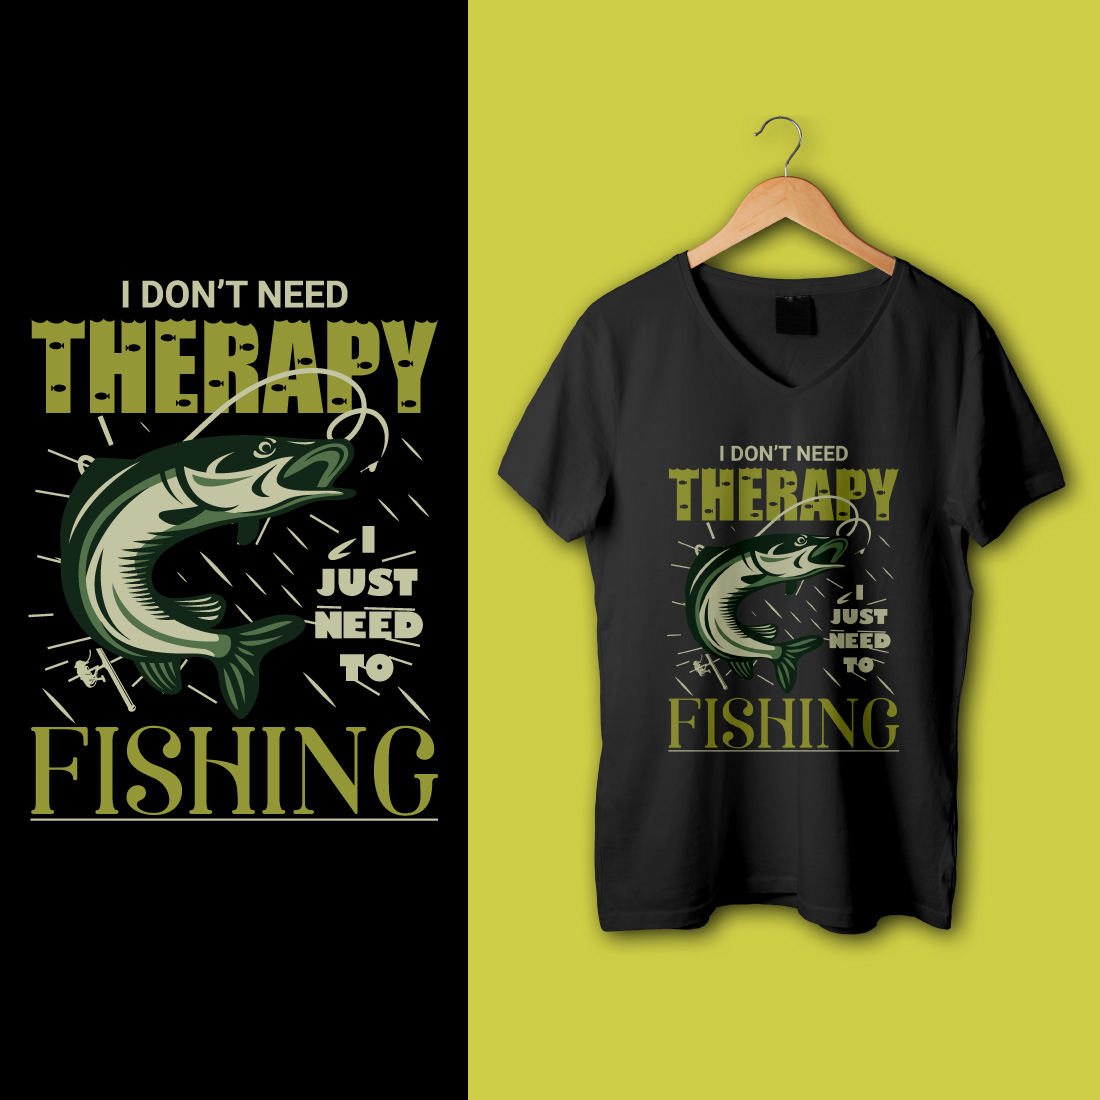 Fishing t-shirt design cover image.